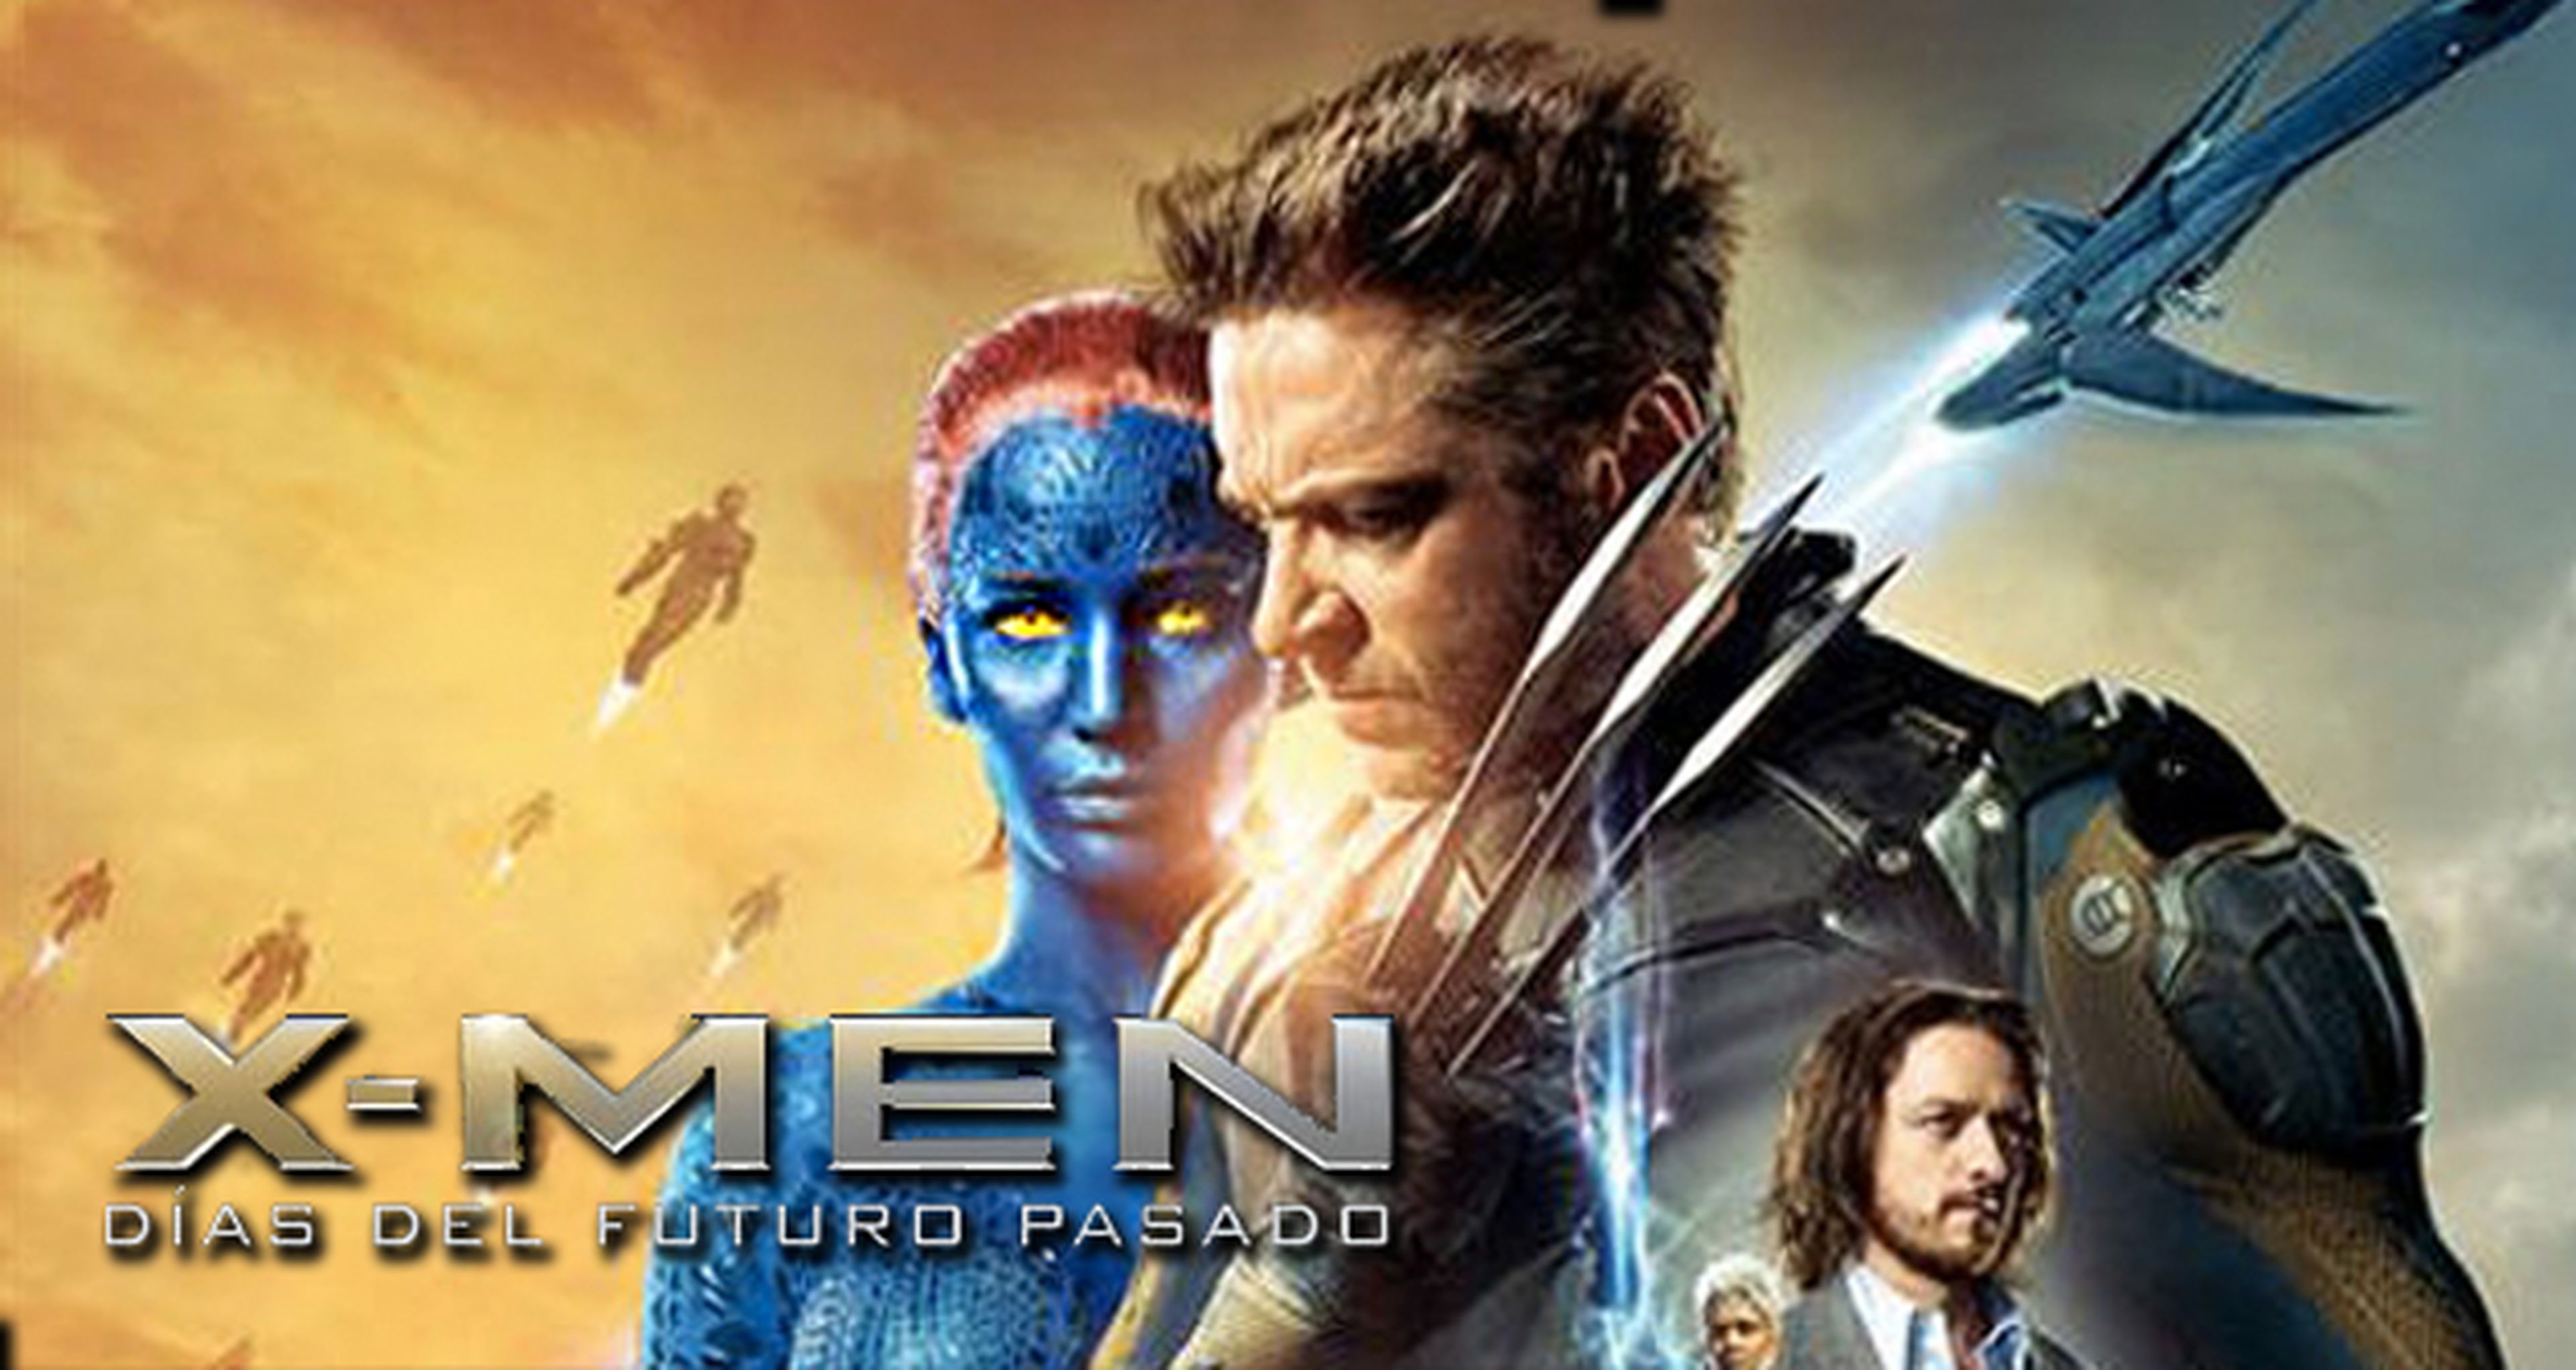 X-Men: días del futuro pasado: ¡Crítica doble!